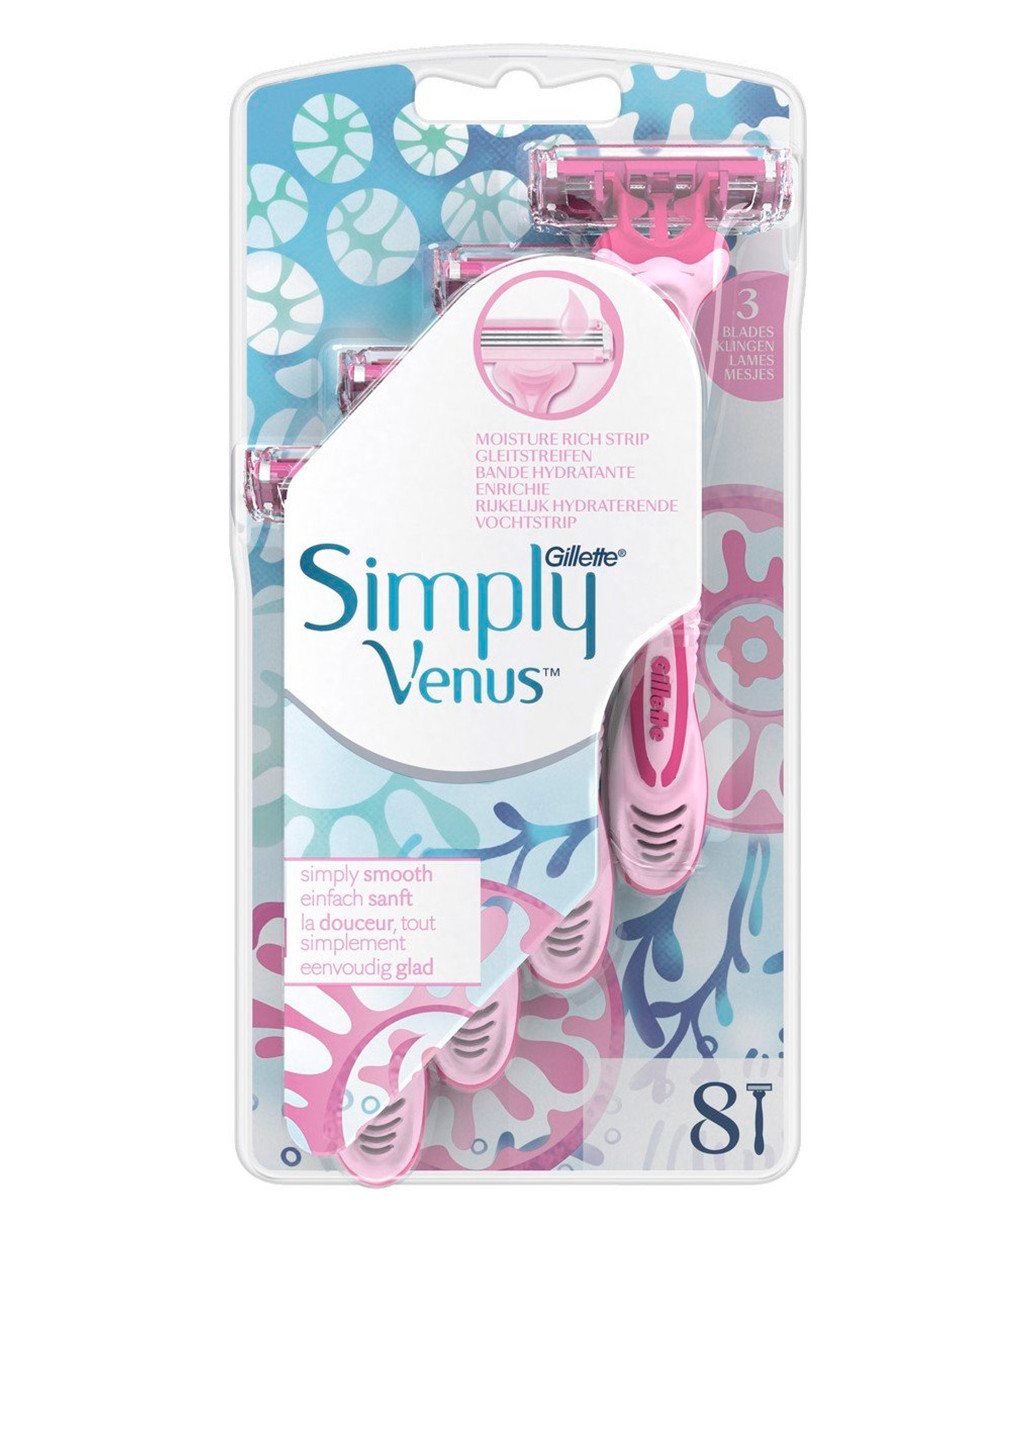 Станок Venus Simply 3 (8 шт.) Gillette (184346968)